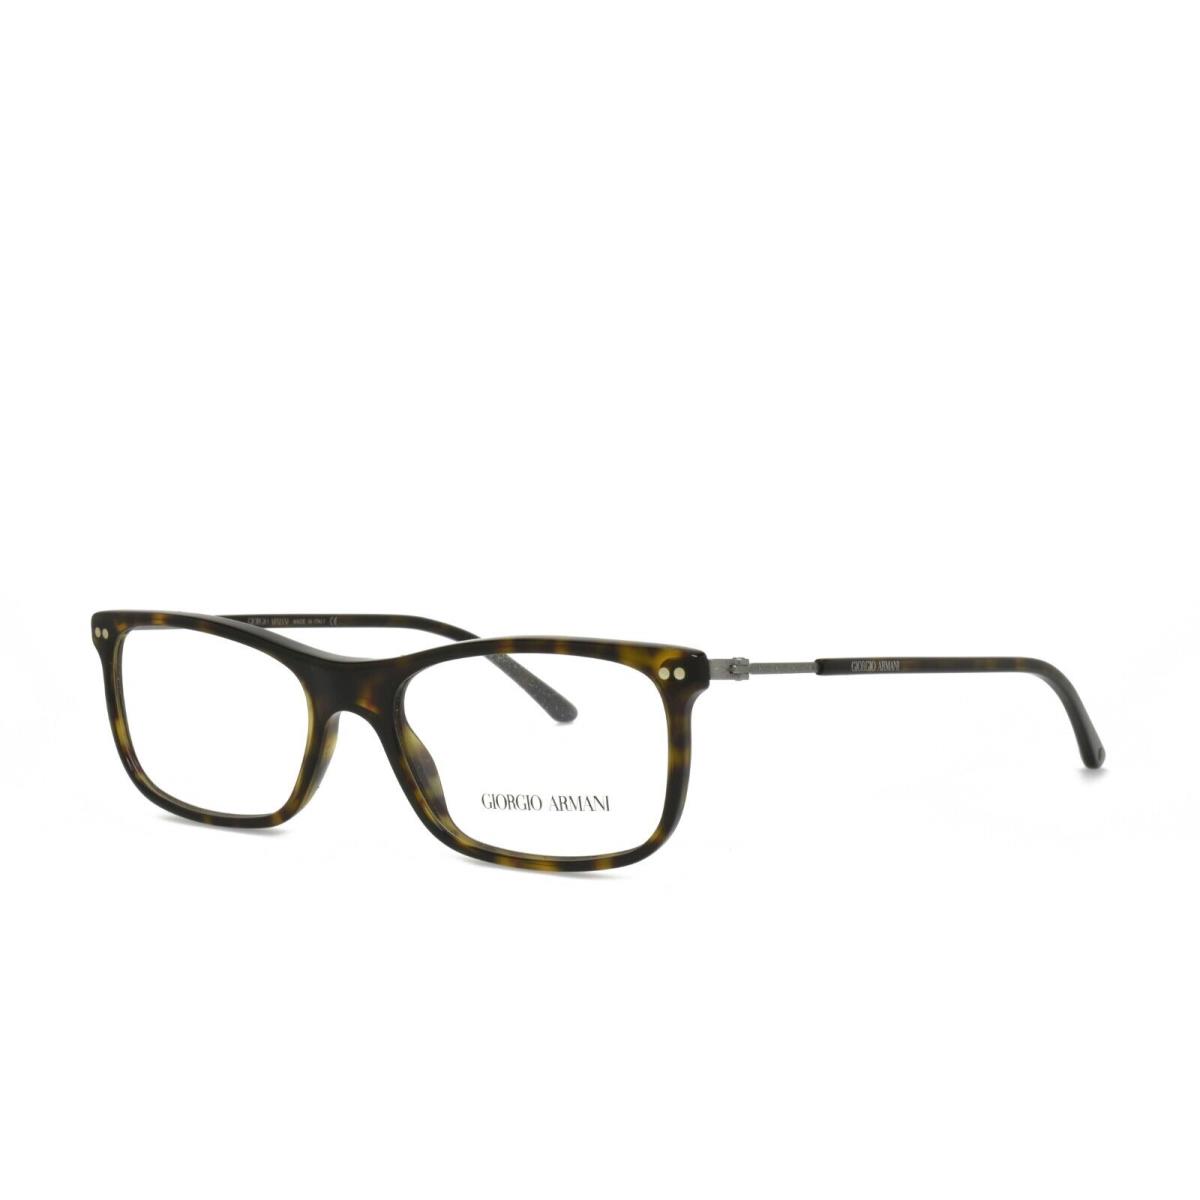 Giorgio Armani 7085 5026 52-17-145 Tortoise Eyeglasses Frames